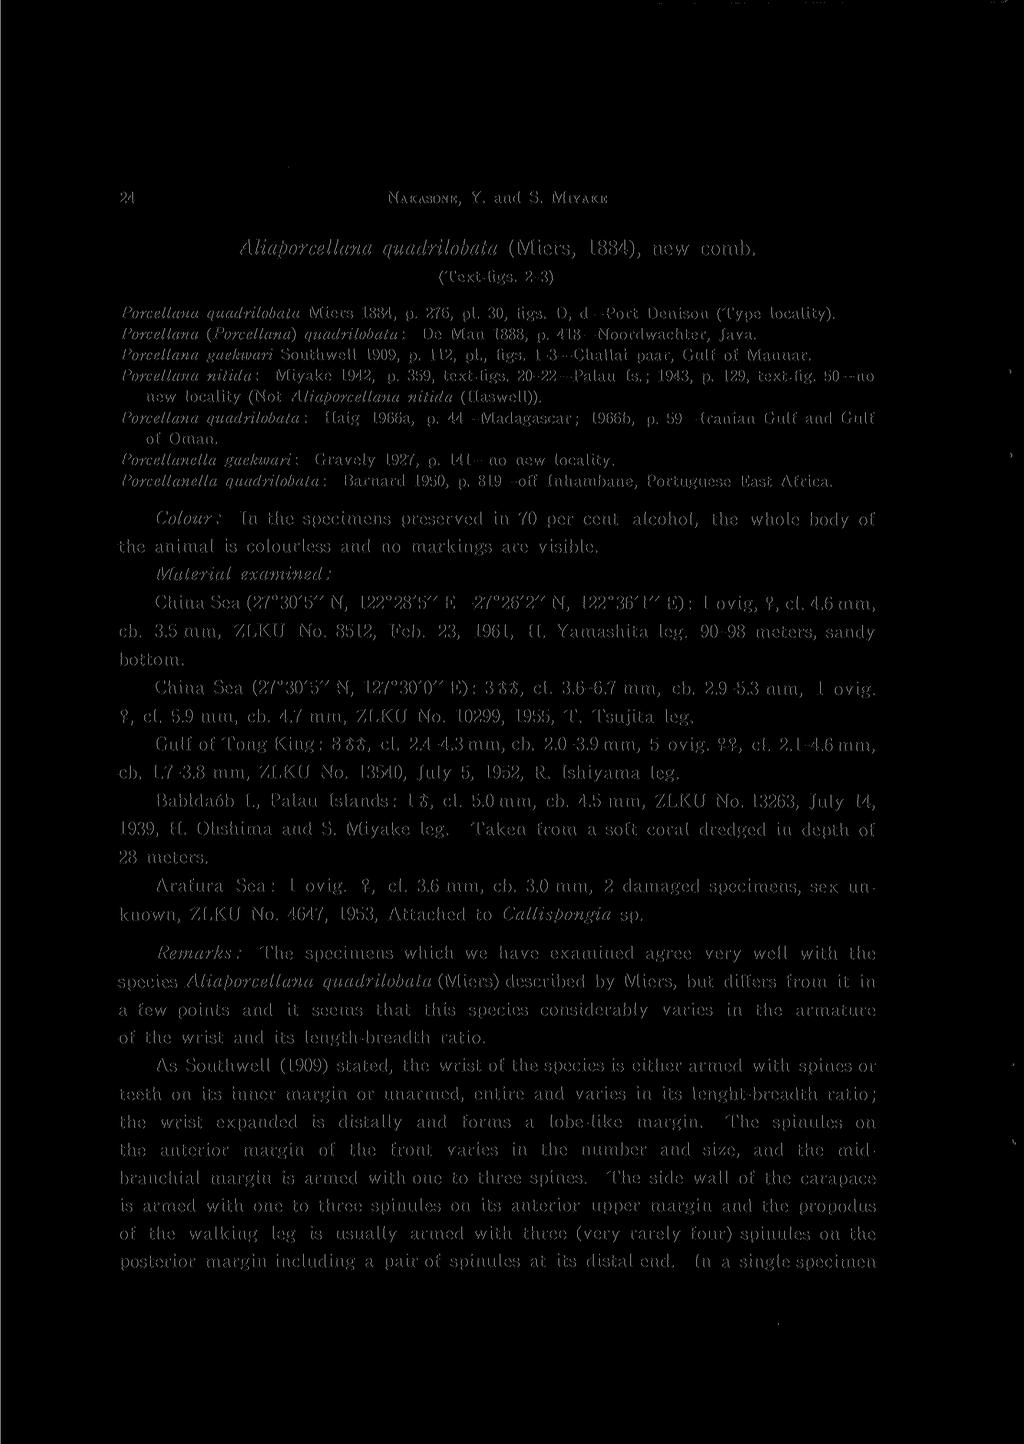 24 NAKASONE, Y. and S. MIVAKK Aliaporcellana quadrilobata (Miers, 1884), new comb. (Text-figs. 2-3) Porcellana quadrilobata Miers 1884, p. 276, pi. 30, figs. D, d Port Denison (Type locality).